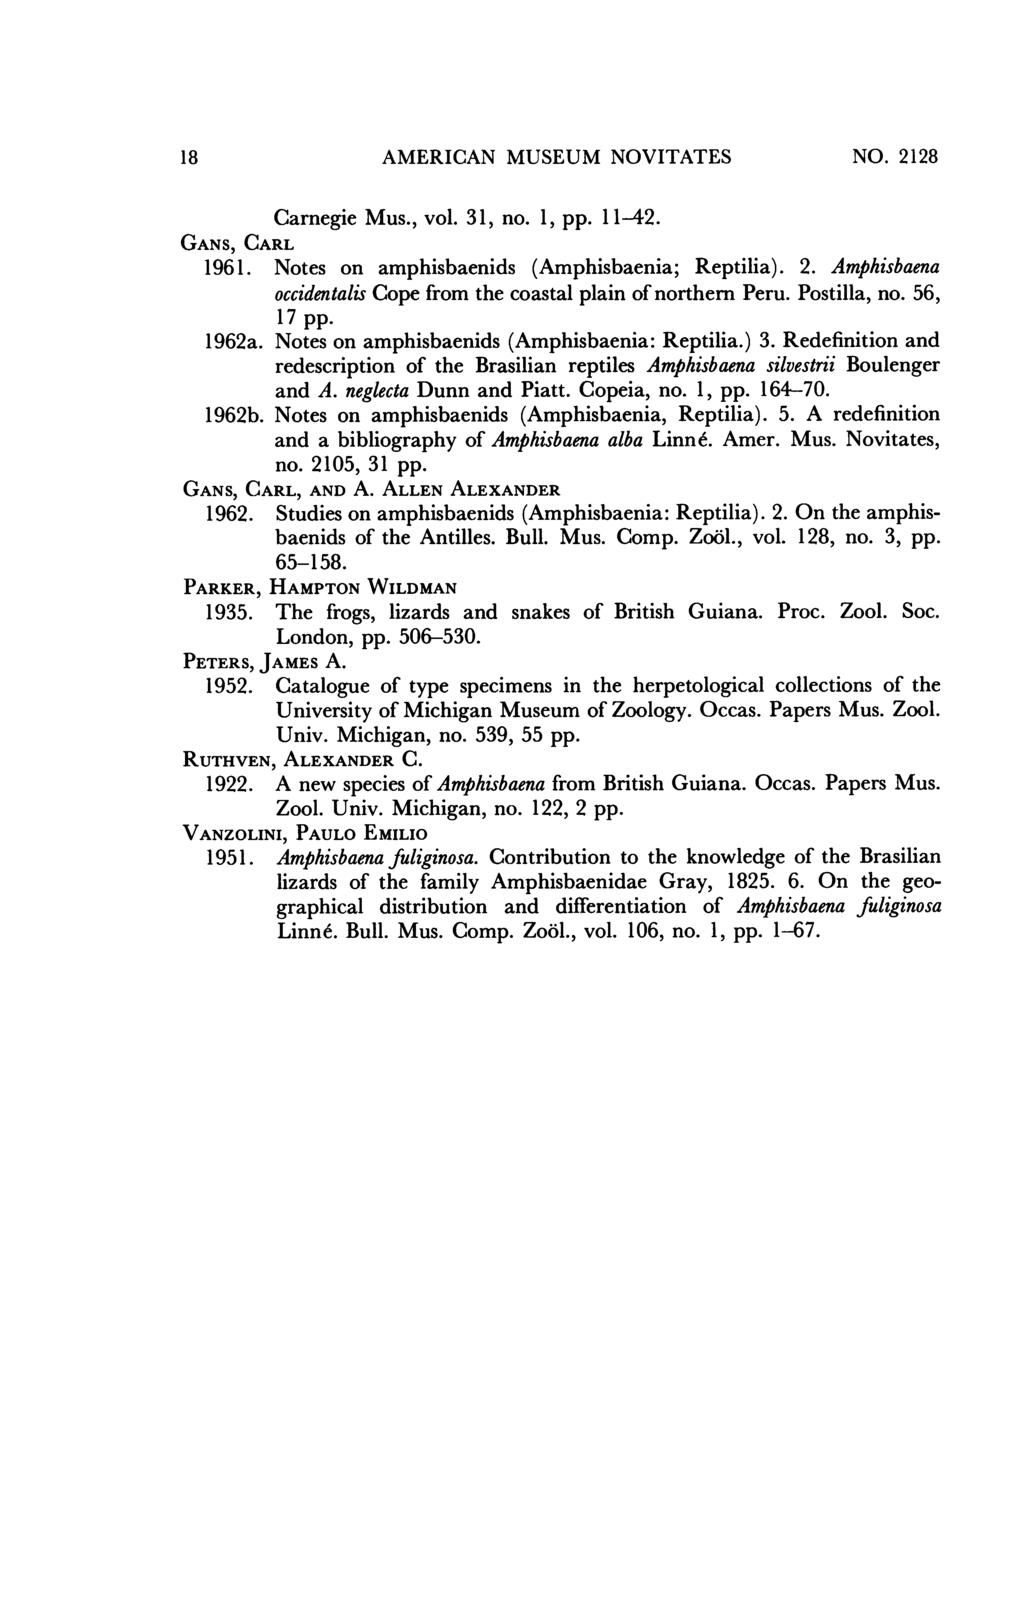 18 AMERICAN MUSEUM NOVITATES NO. 2128 Carnegie Mus., vol. 31, no. 1, pp. 11-42. GANS, CARL 1961. Notes on amphisbaenids (Amphisbaenia; Reptilia). 2. Amphisbaena occidentalis Cope from the coastal plain of northern Peru.